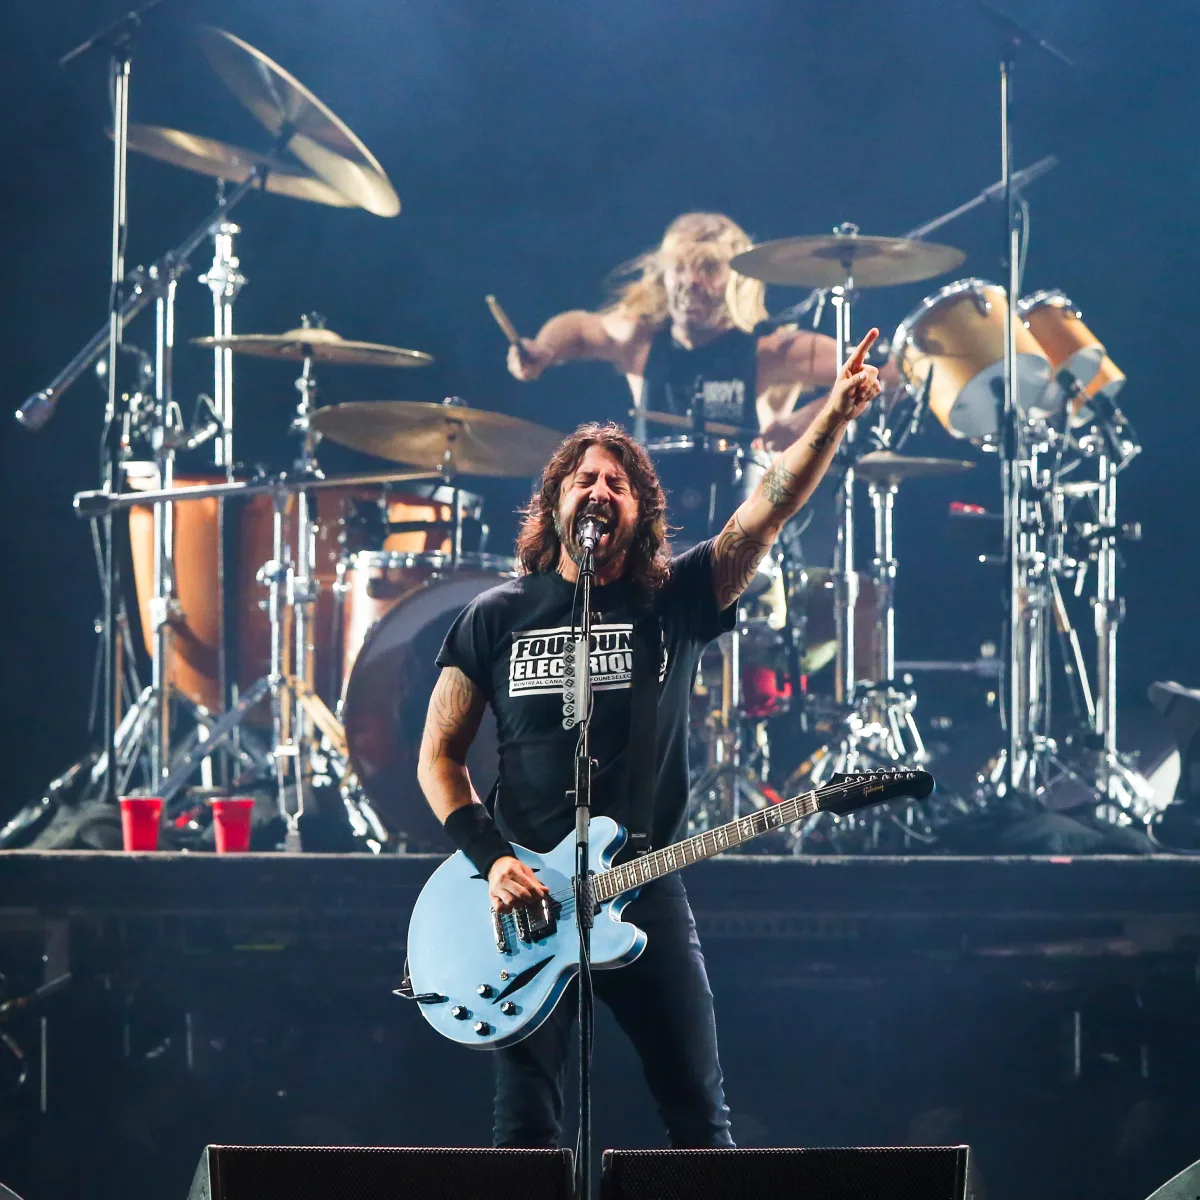 Foo Fighters Lyrics! Quiz, Foo Fighters